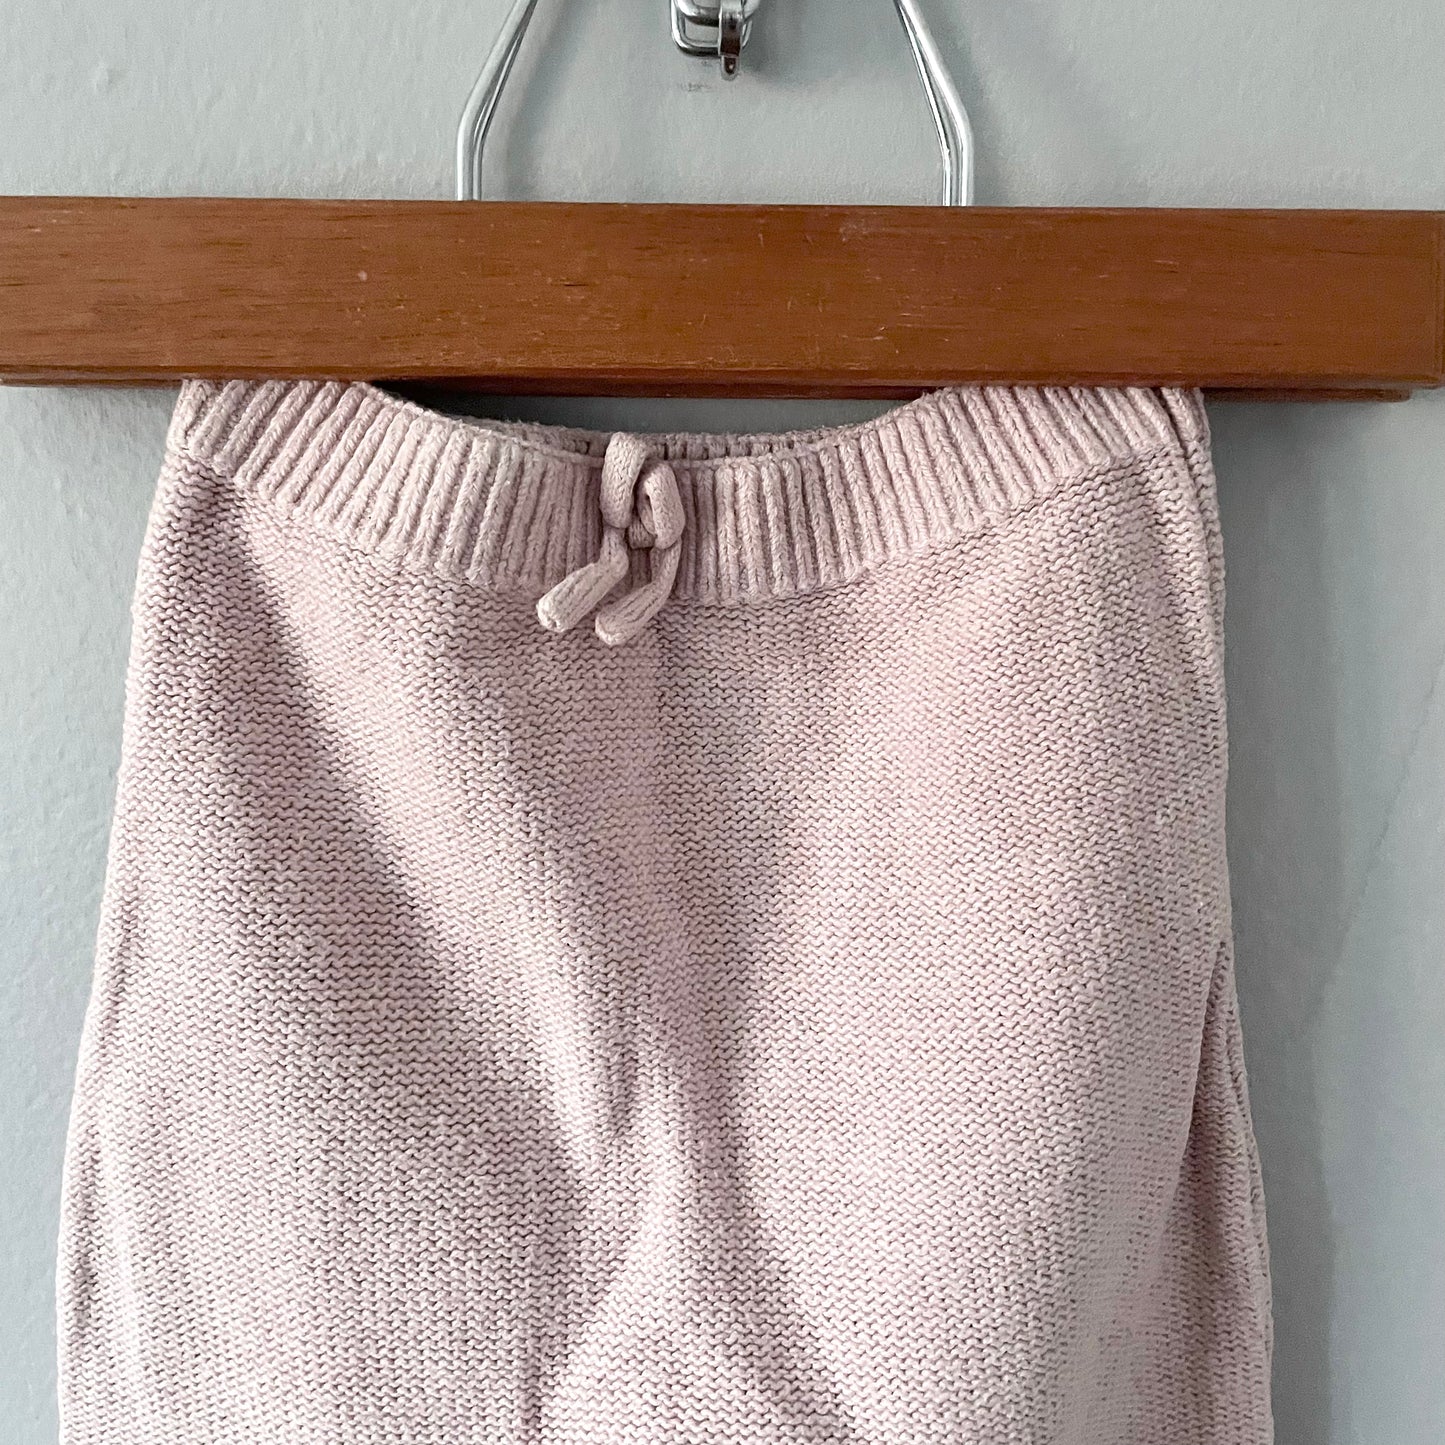 Zara / knit pink footed pant / 6-9M